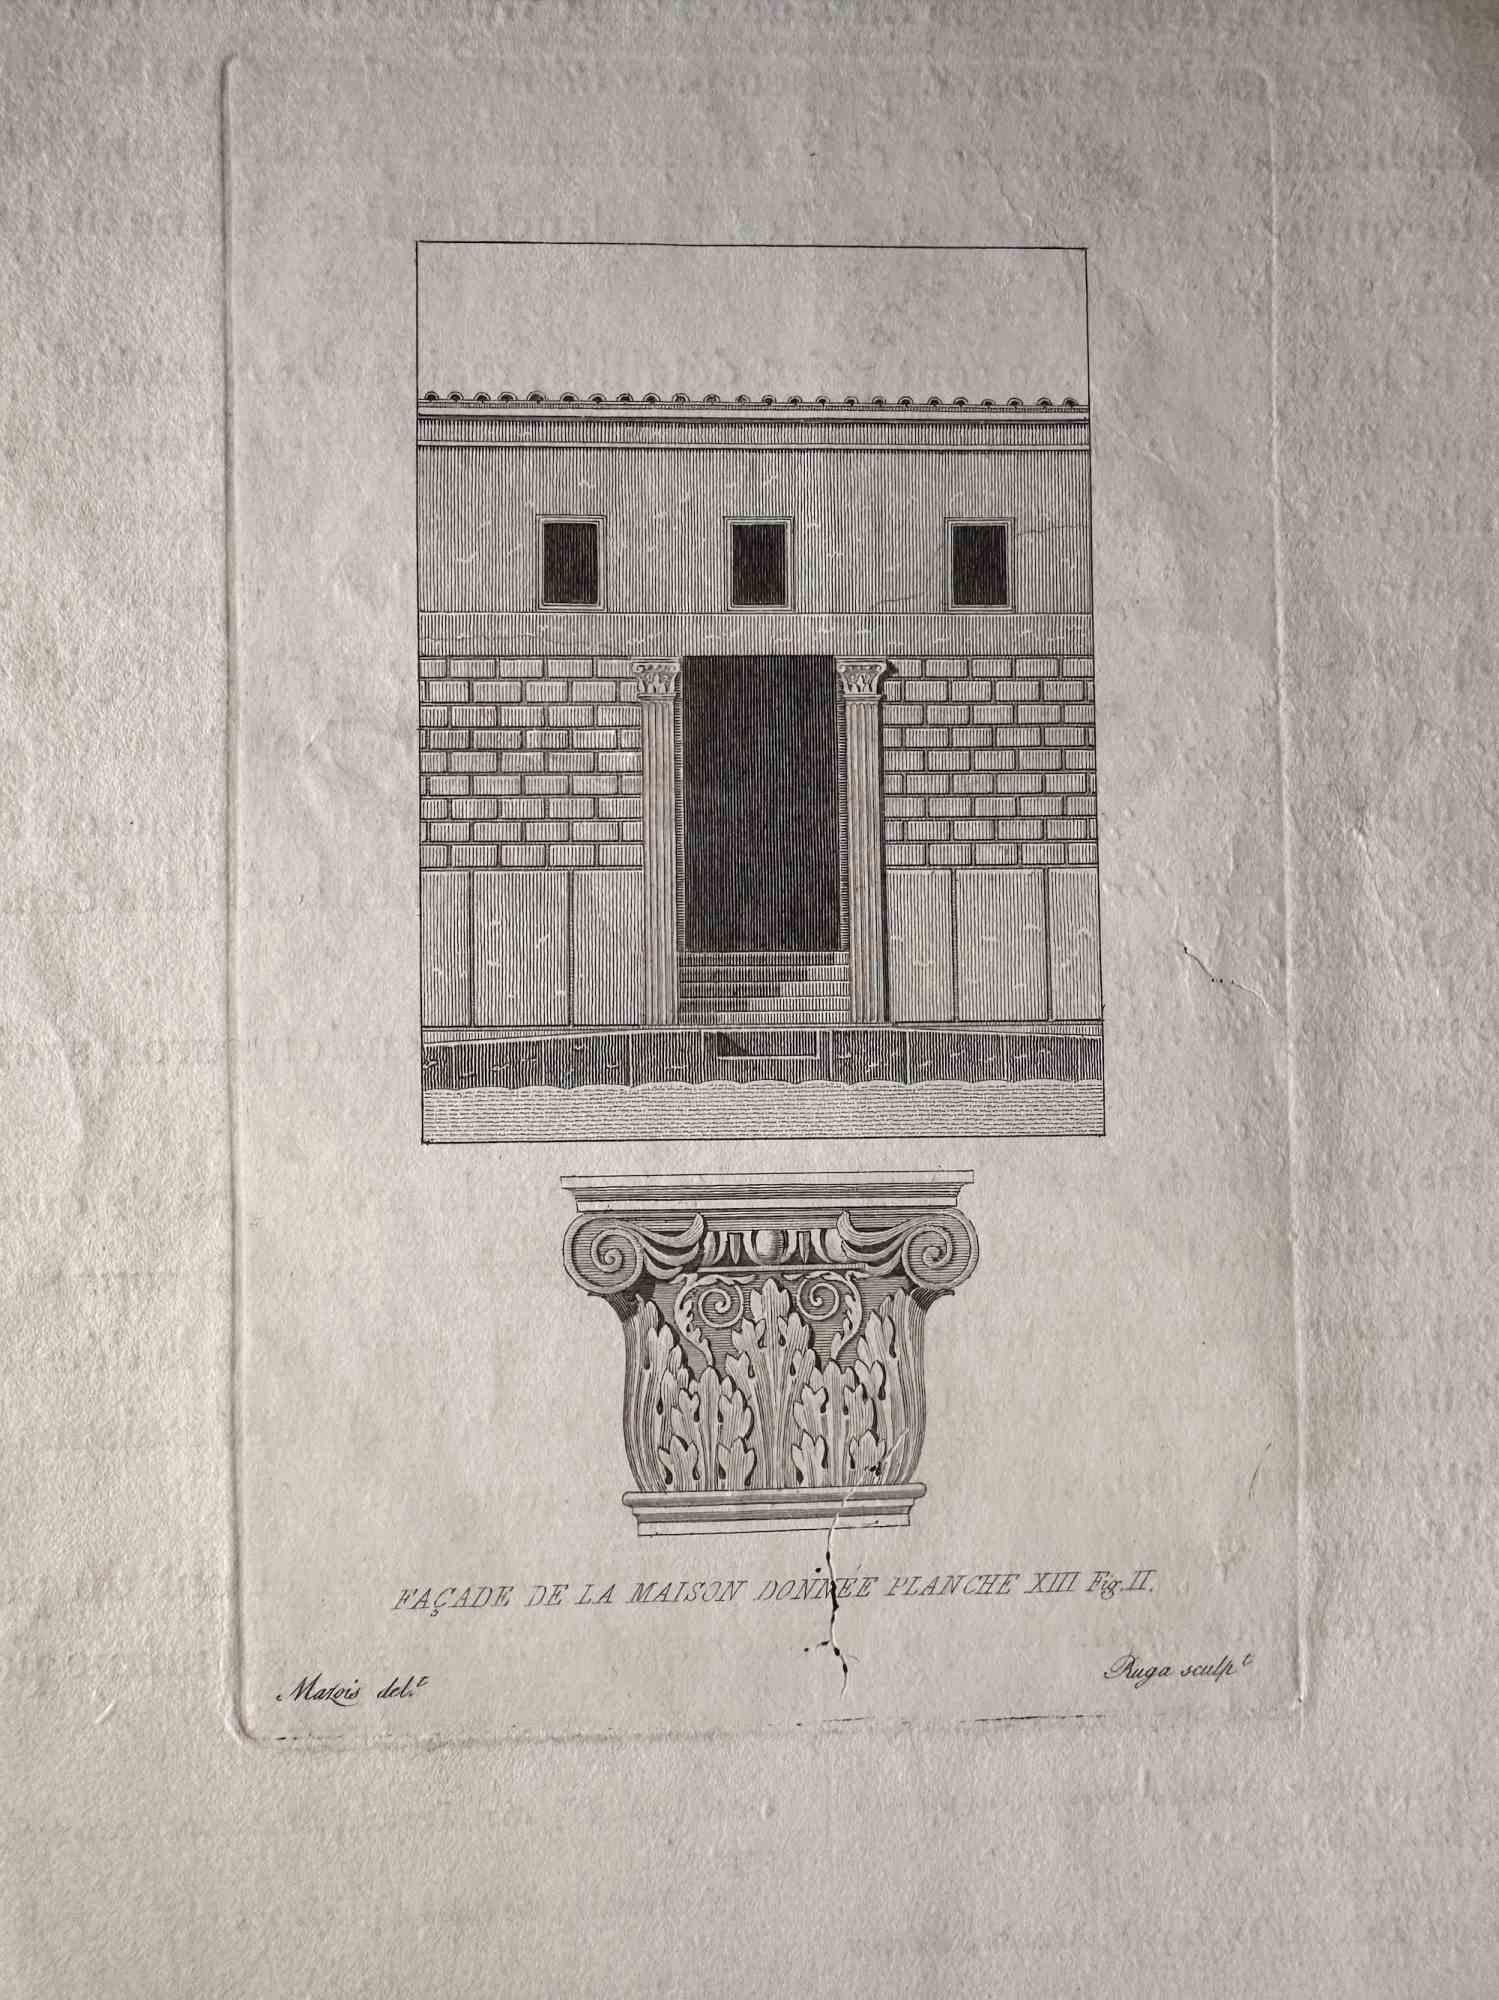 Architectural - Maison Donne - Etching - 1850s